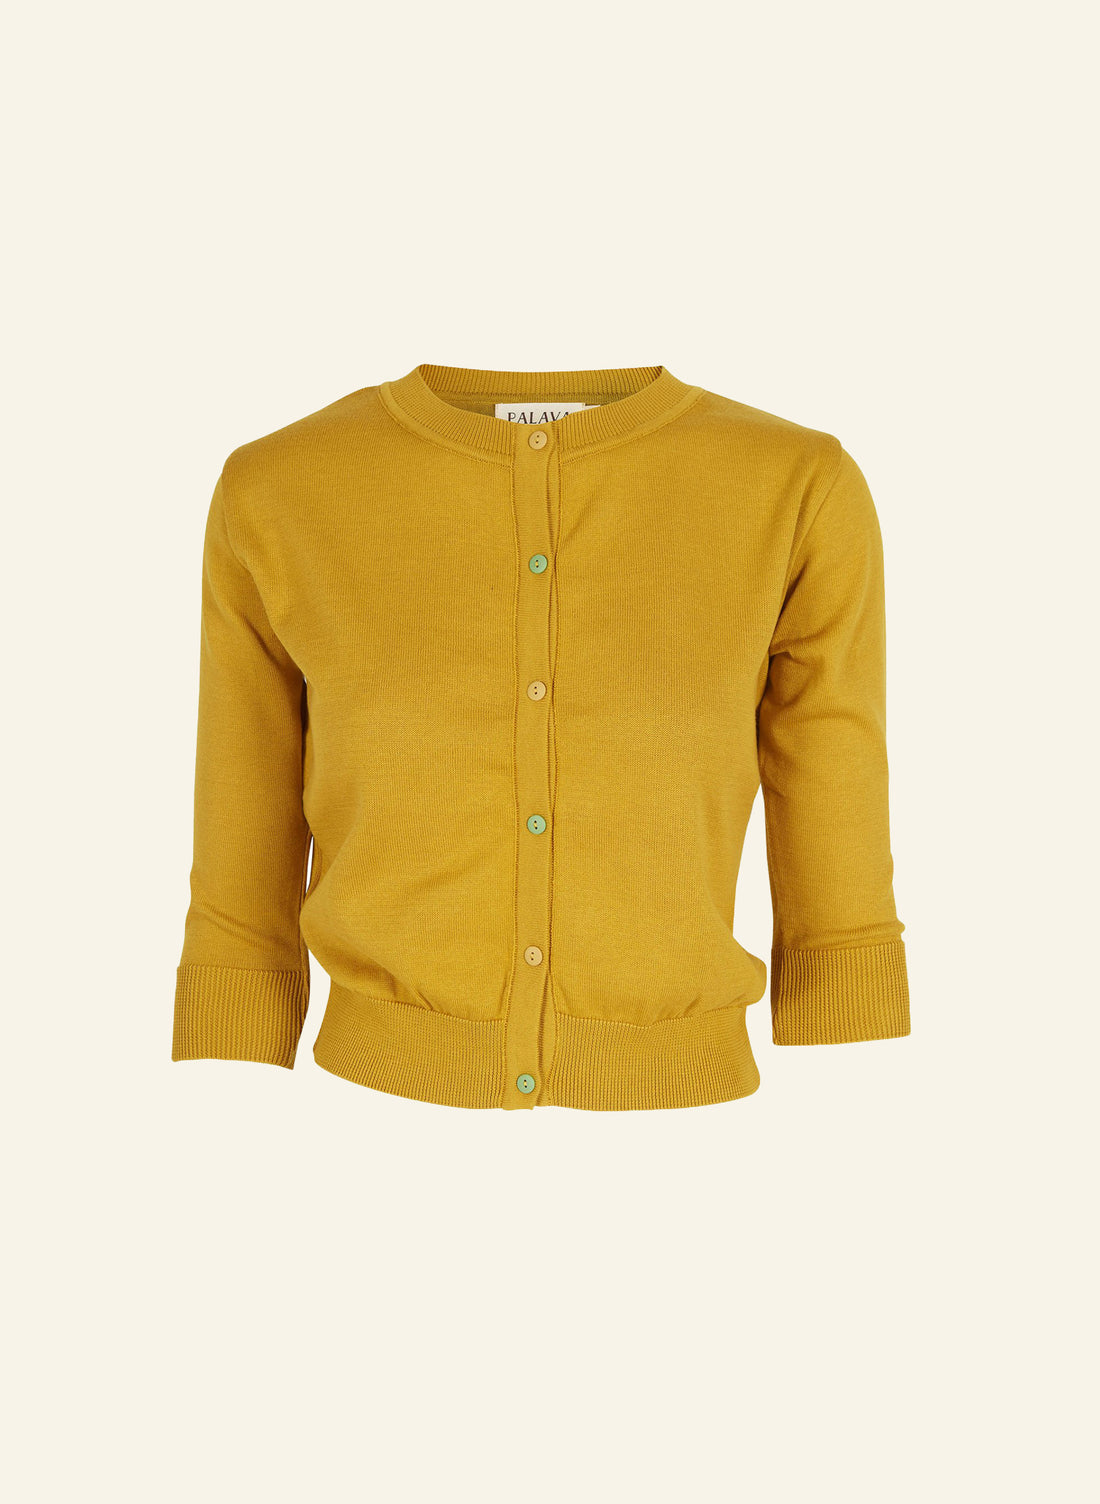 100% Organic Cotton Mustard Yellow Cardigan | Vintage Style